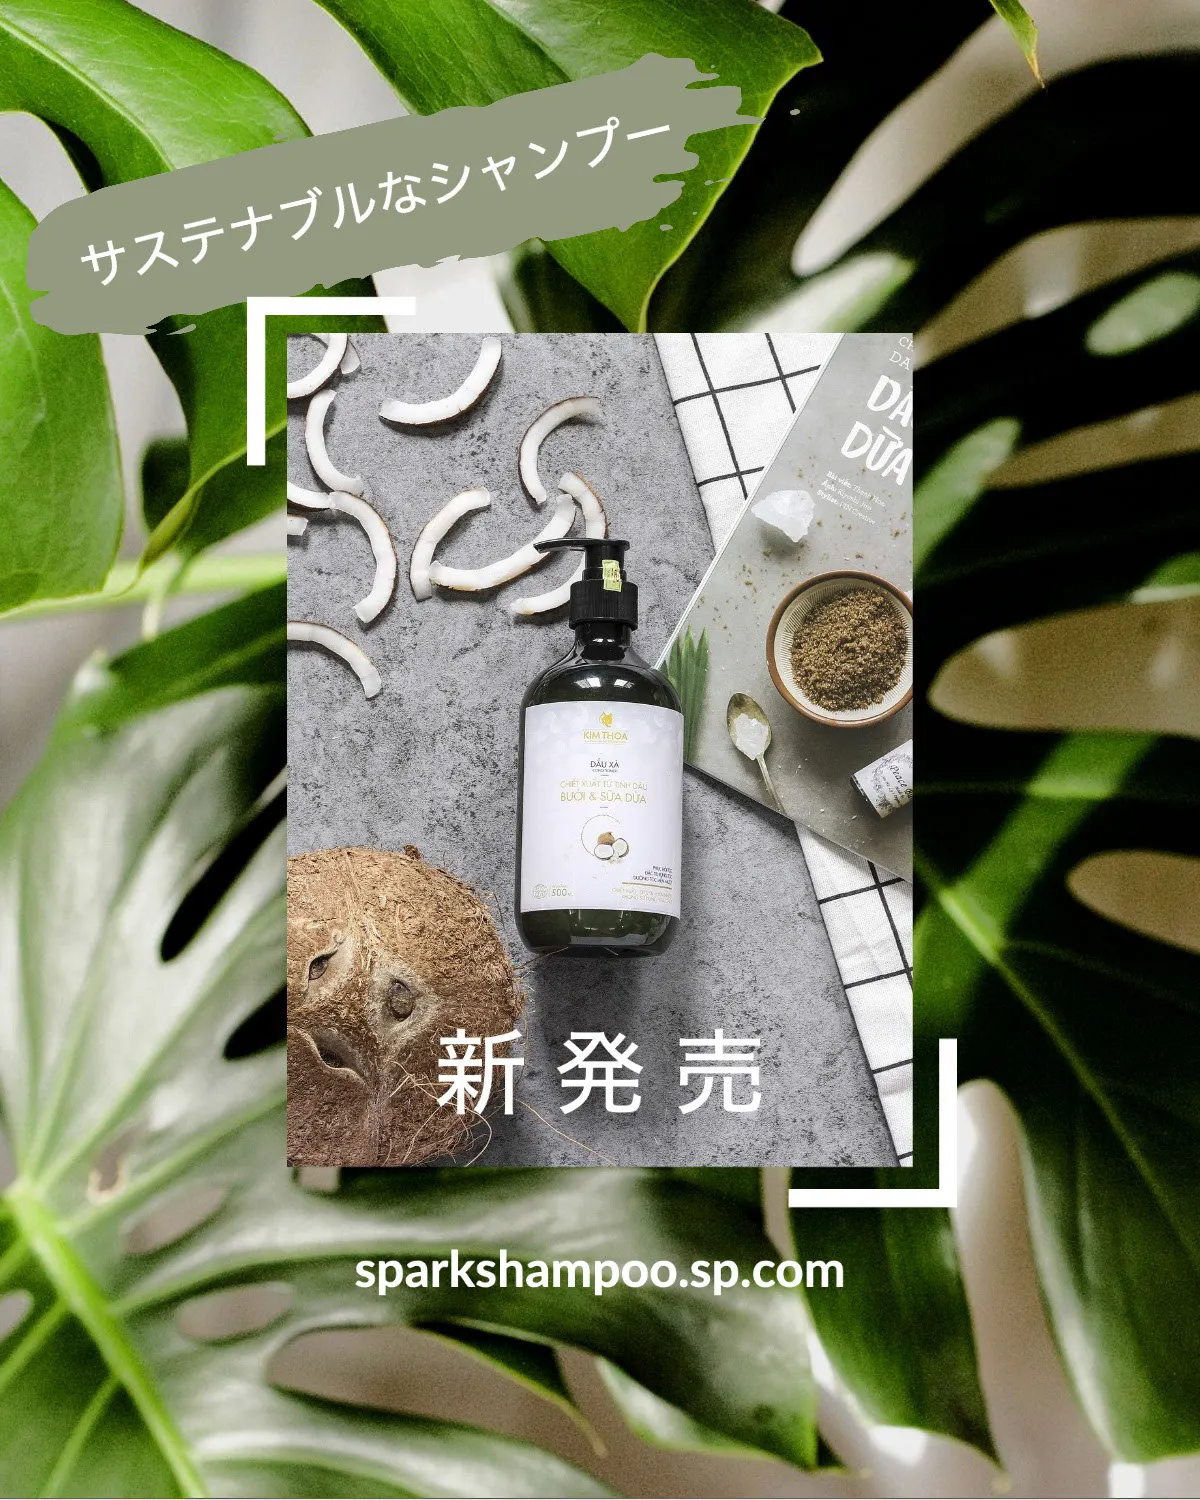 Sustainable shampoo instagram ad